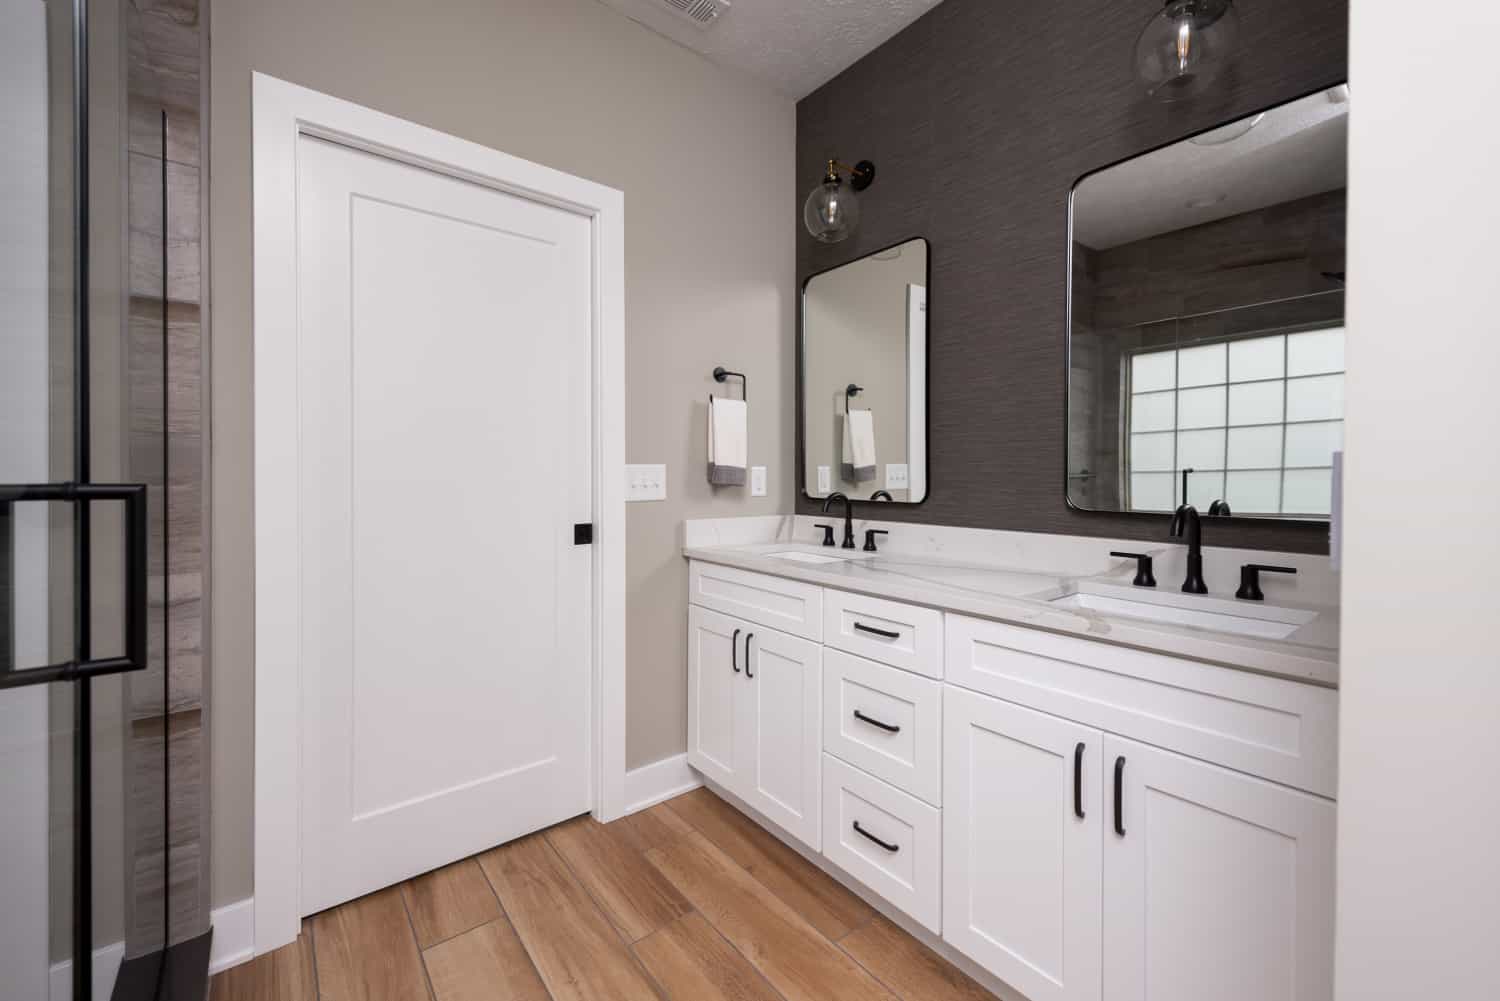 Nicholas Design Build | A modern bathroom with wood floors.